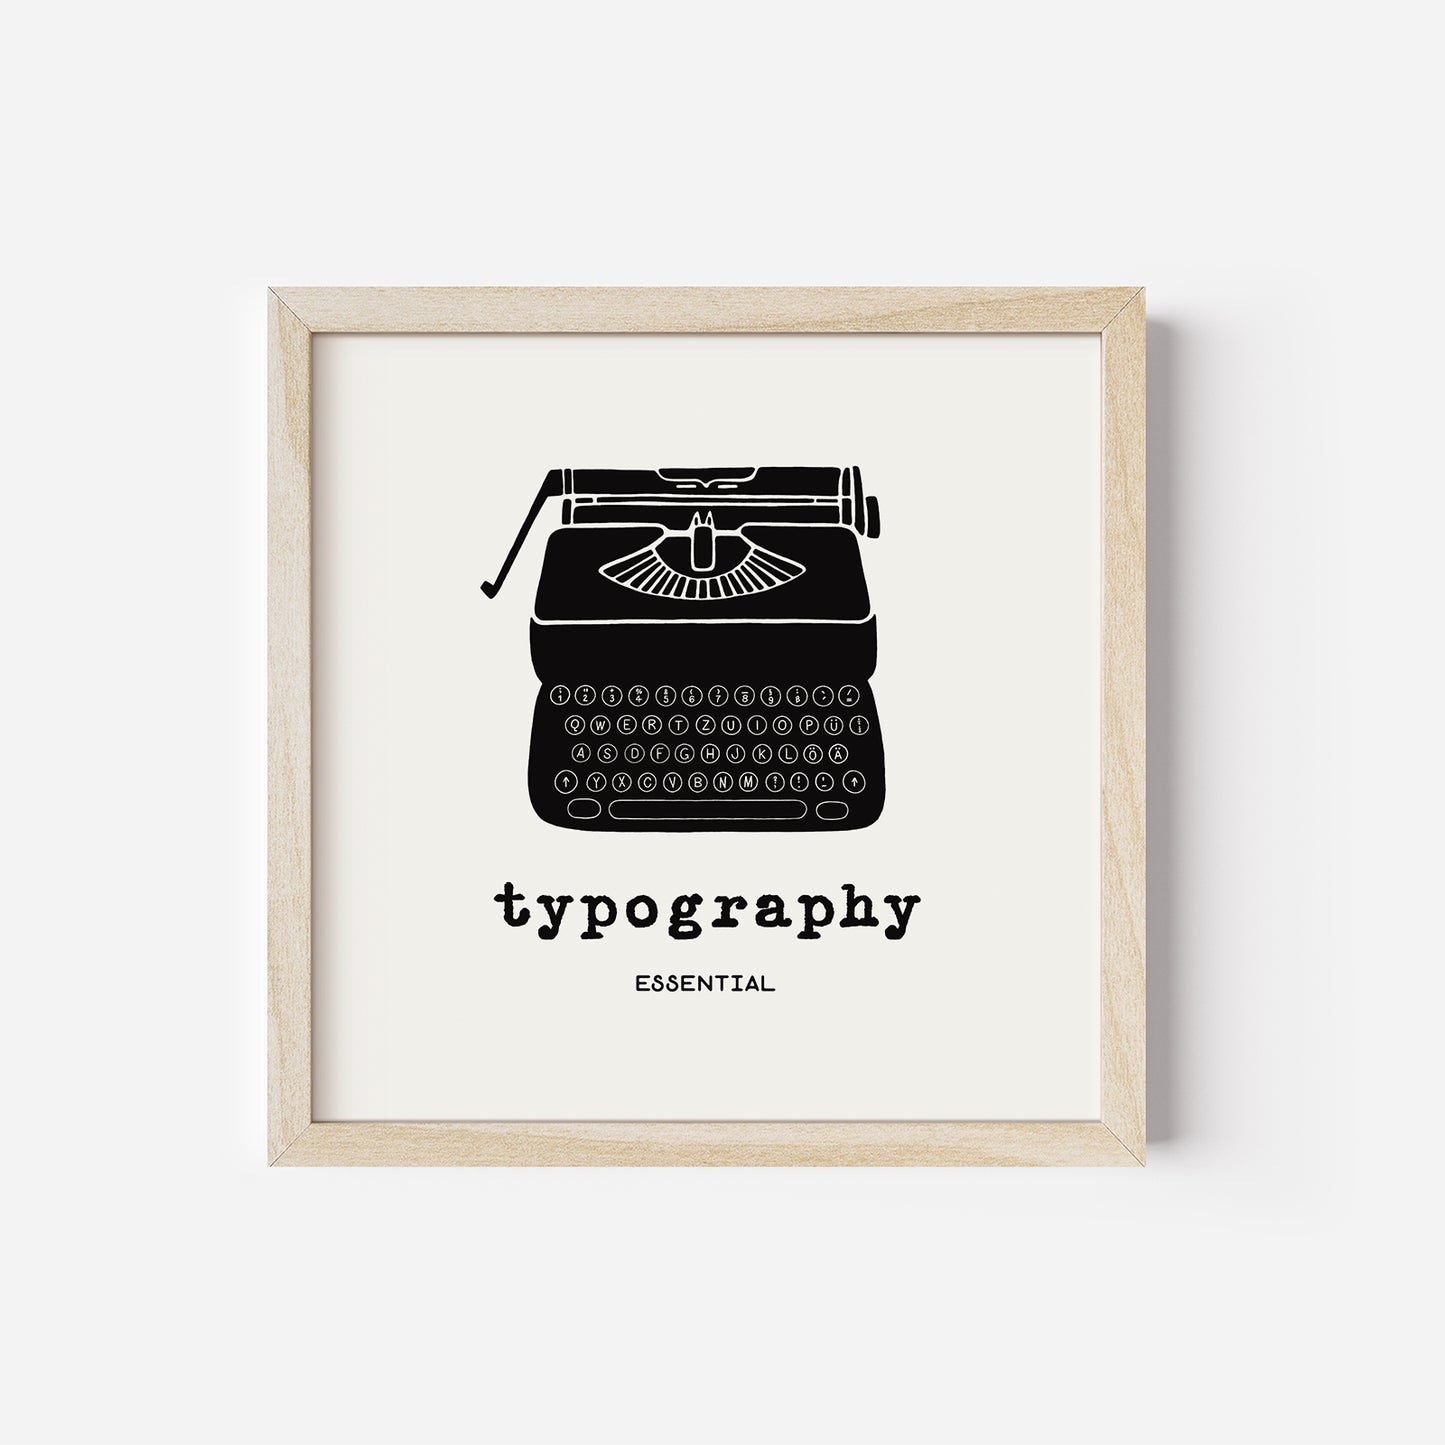 Fine Art Print "Typography" Essential